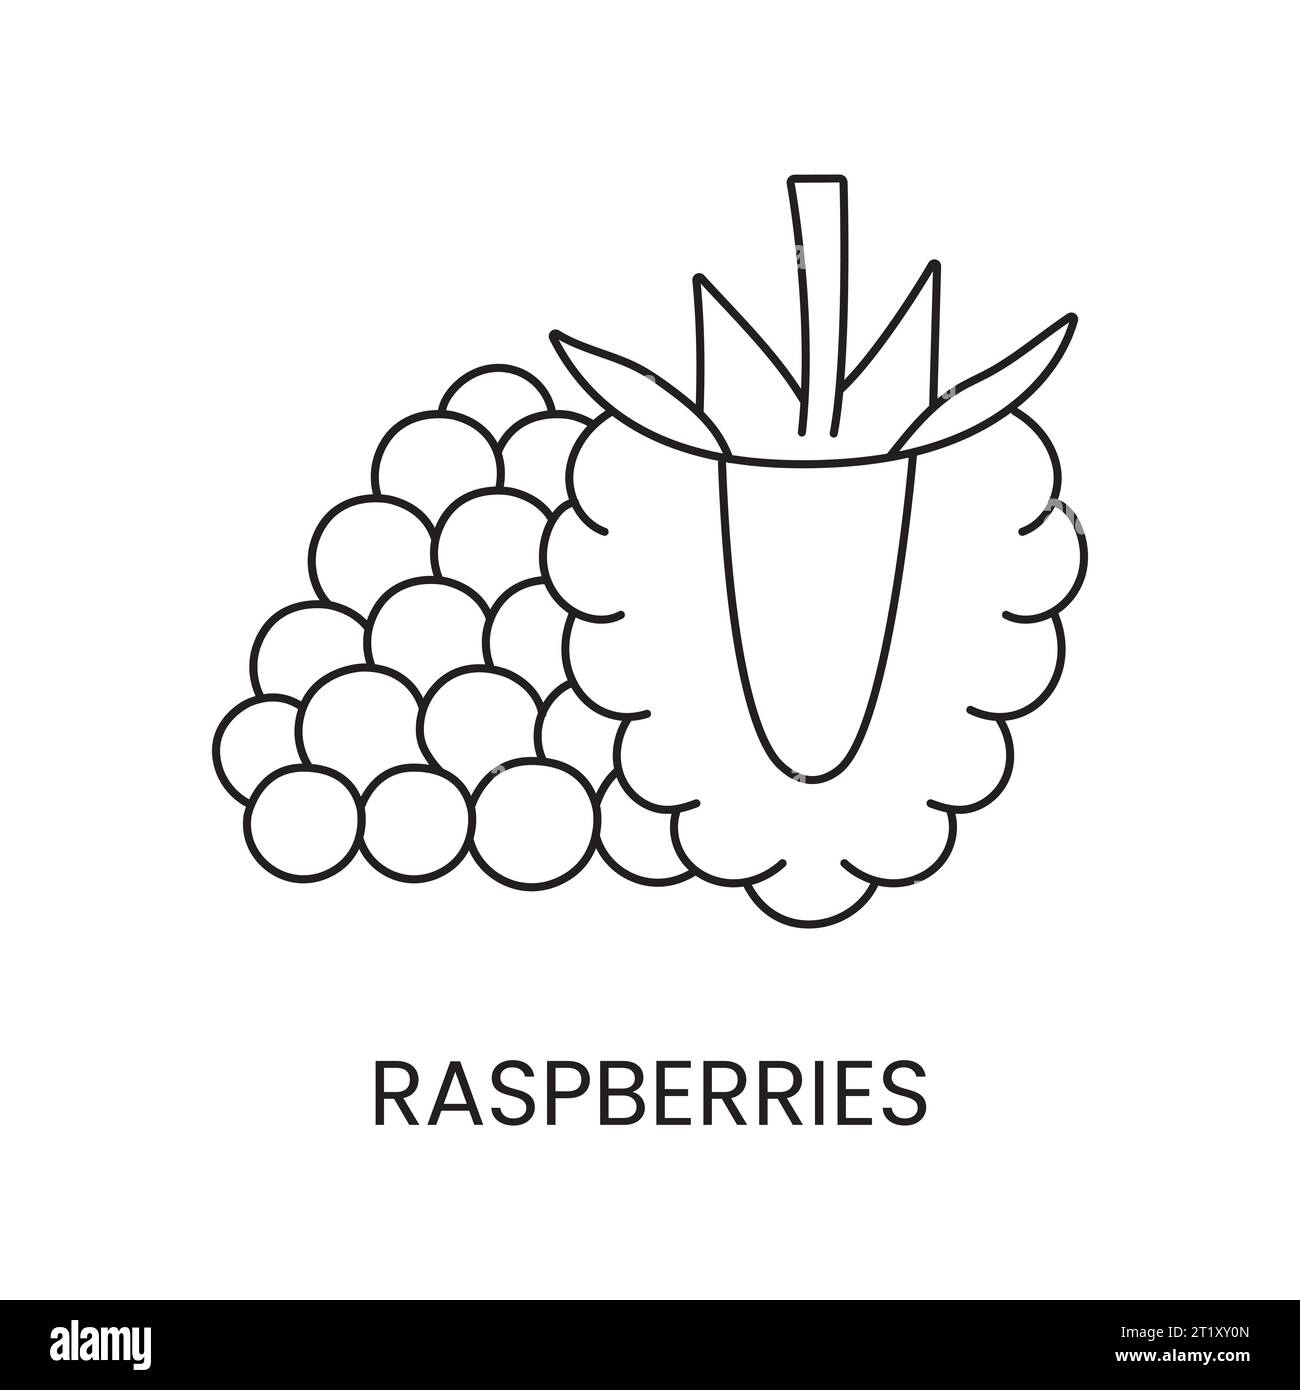 Raspberry illustration black and white stock photos images